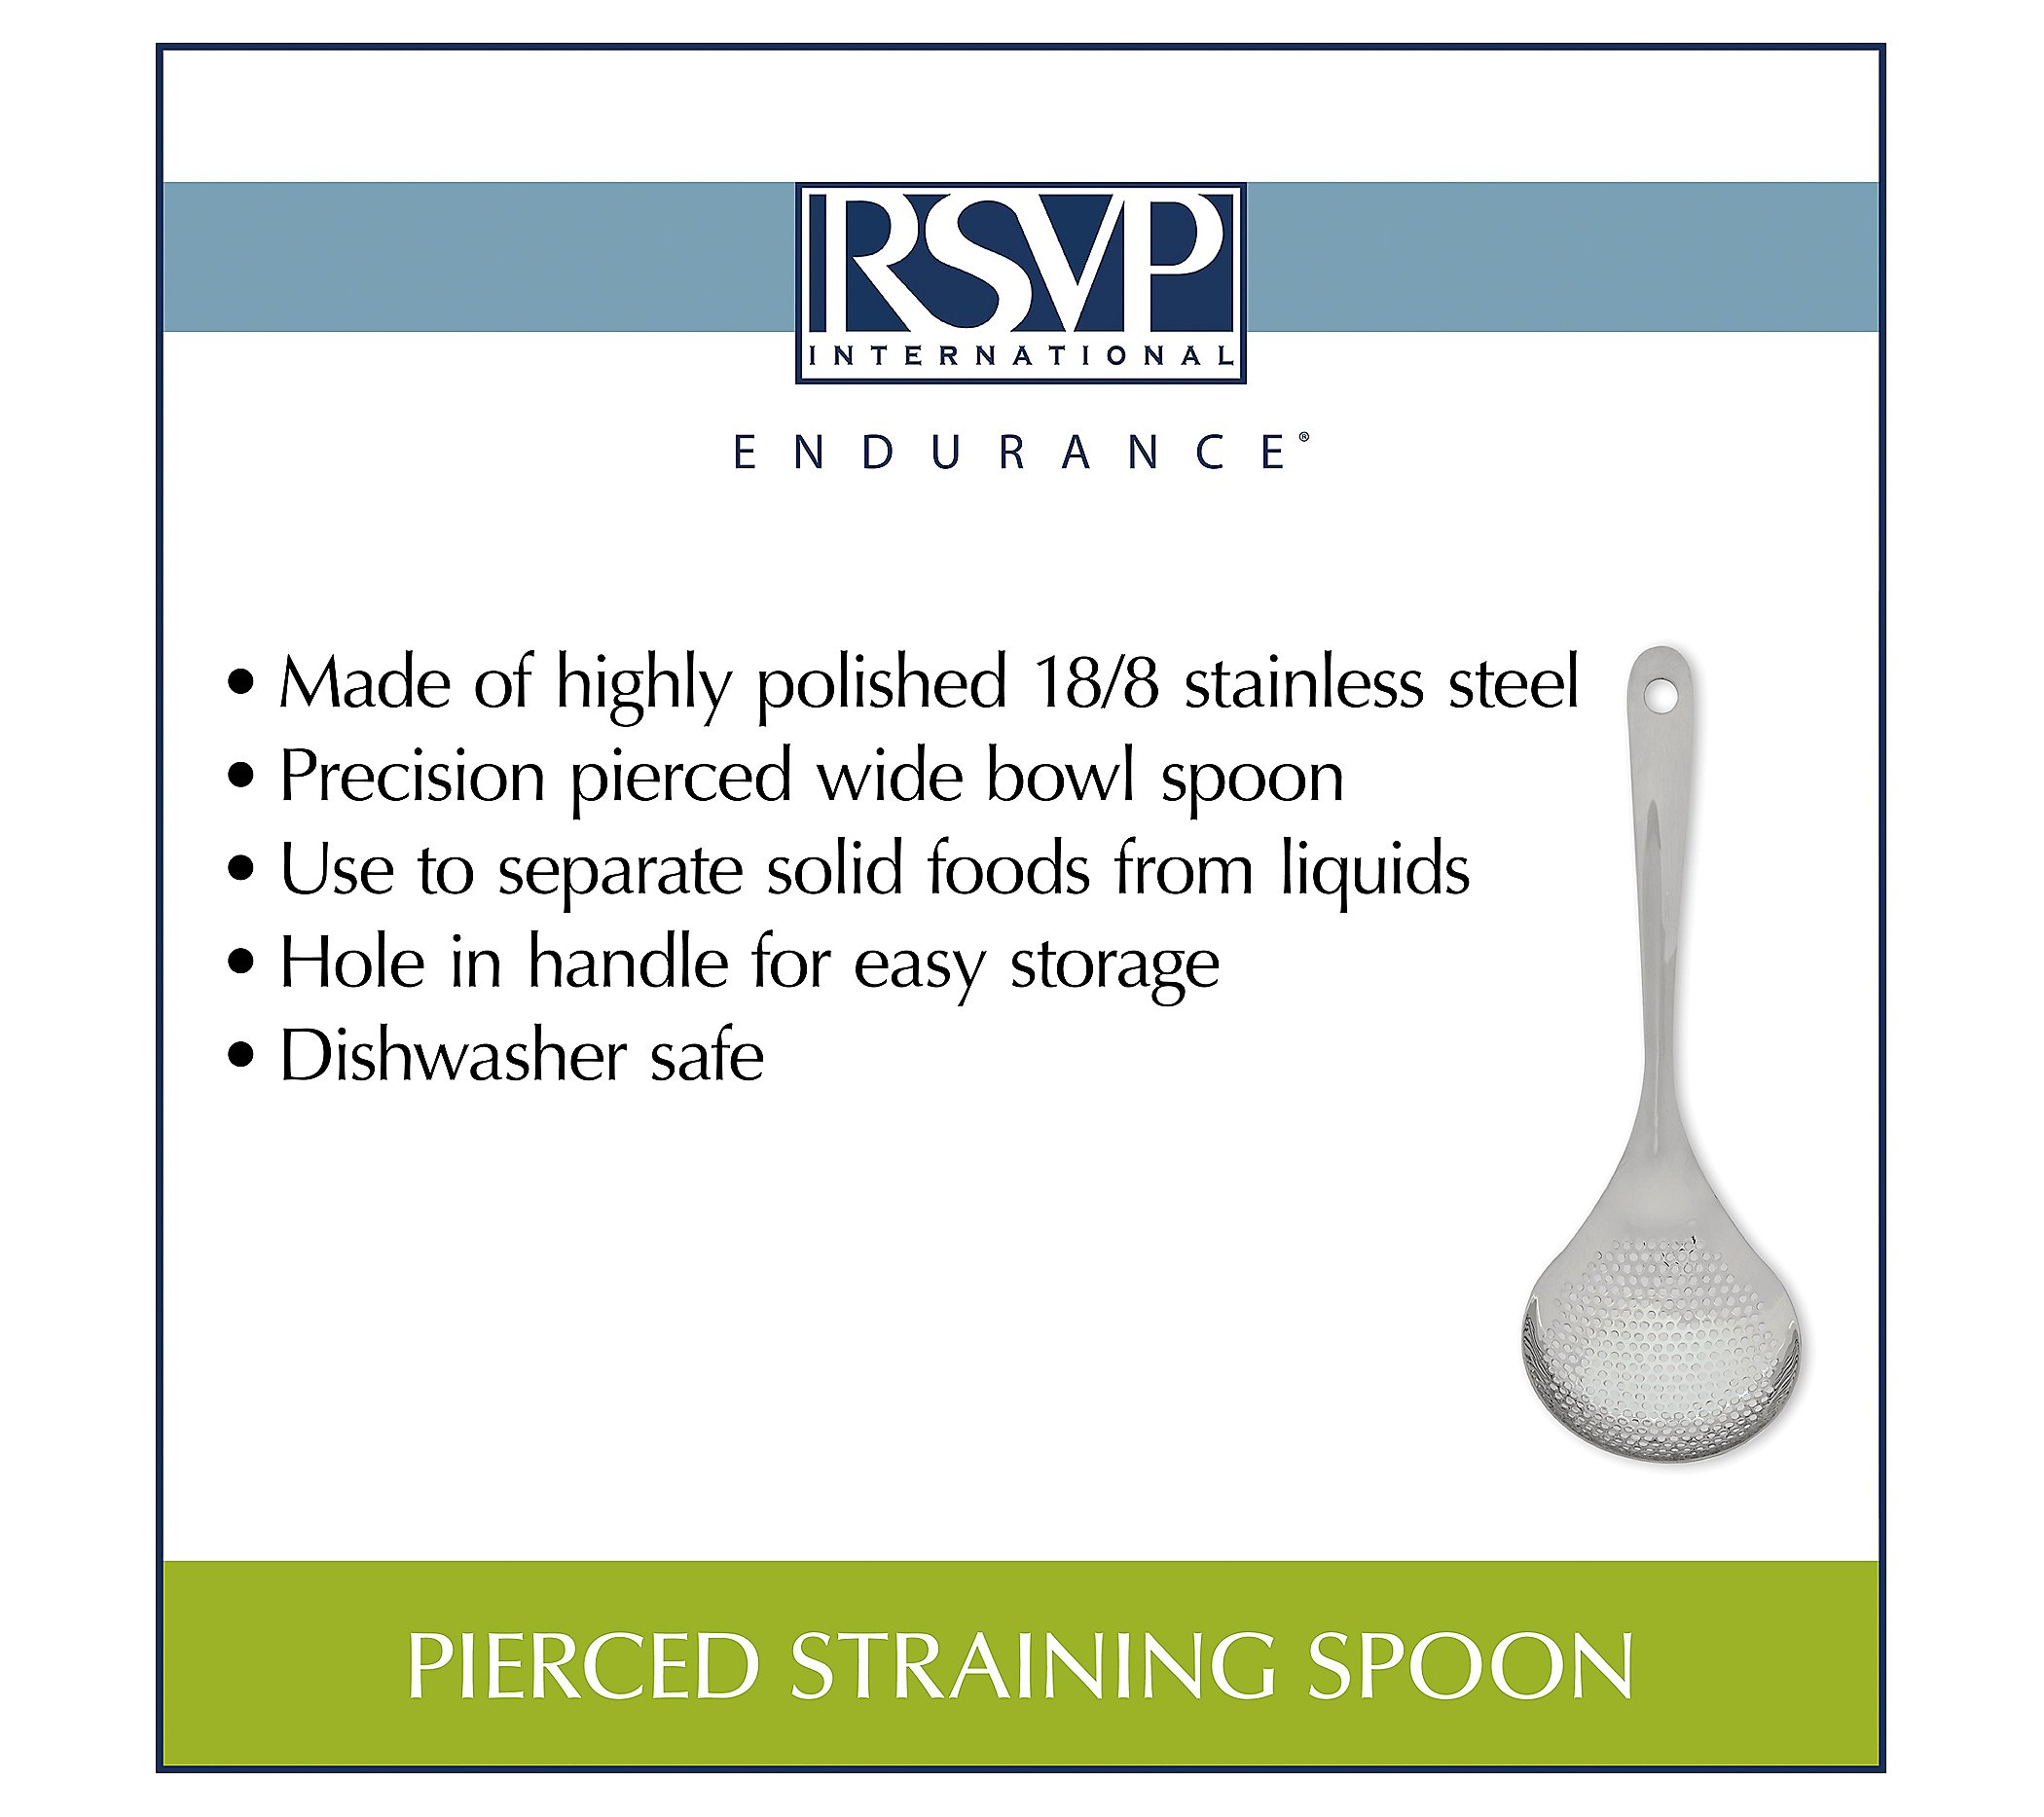 RSVP Endurance Pierced Straining Spoon